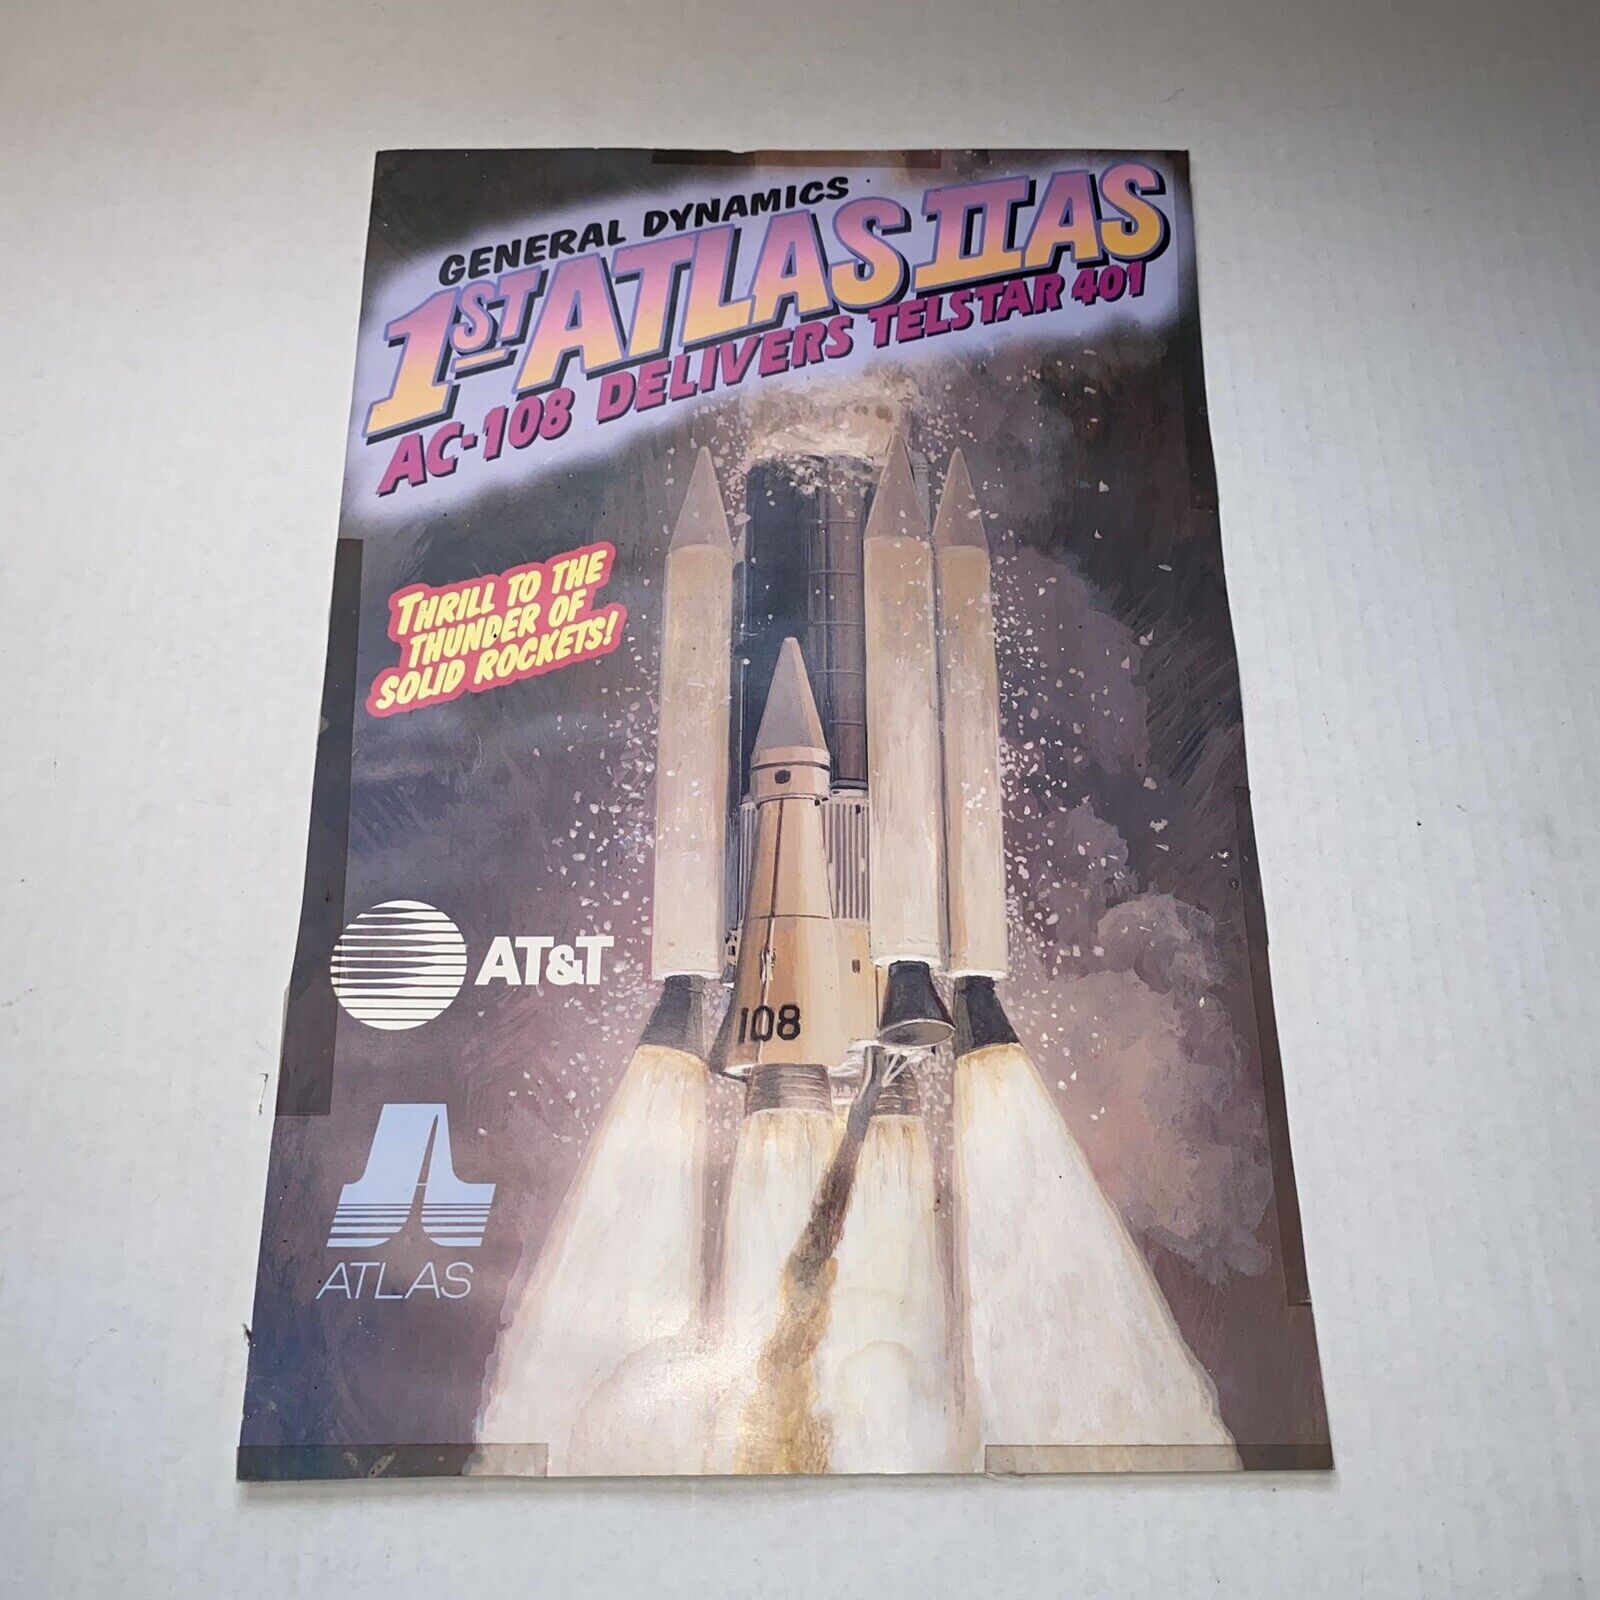 Vintage 1993 General Dynamics NASA Atlas IIAS AC108 AT&T Rocket Launch Poster